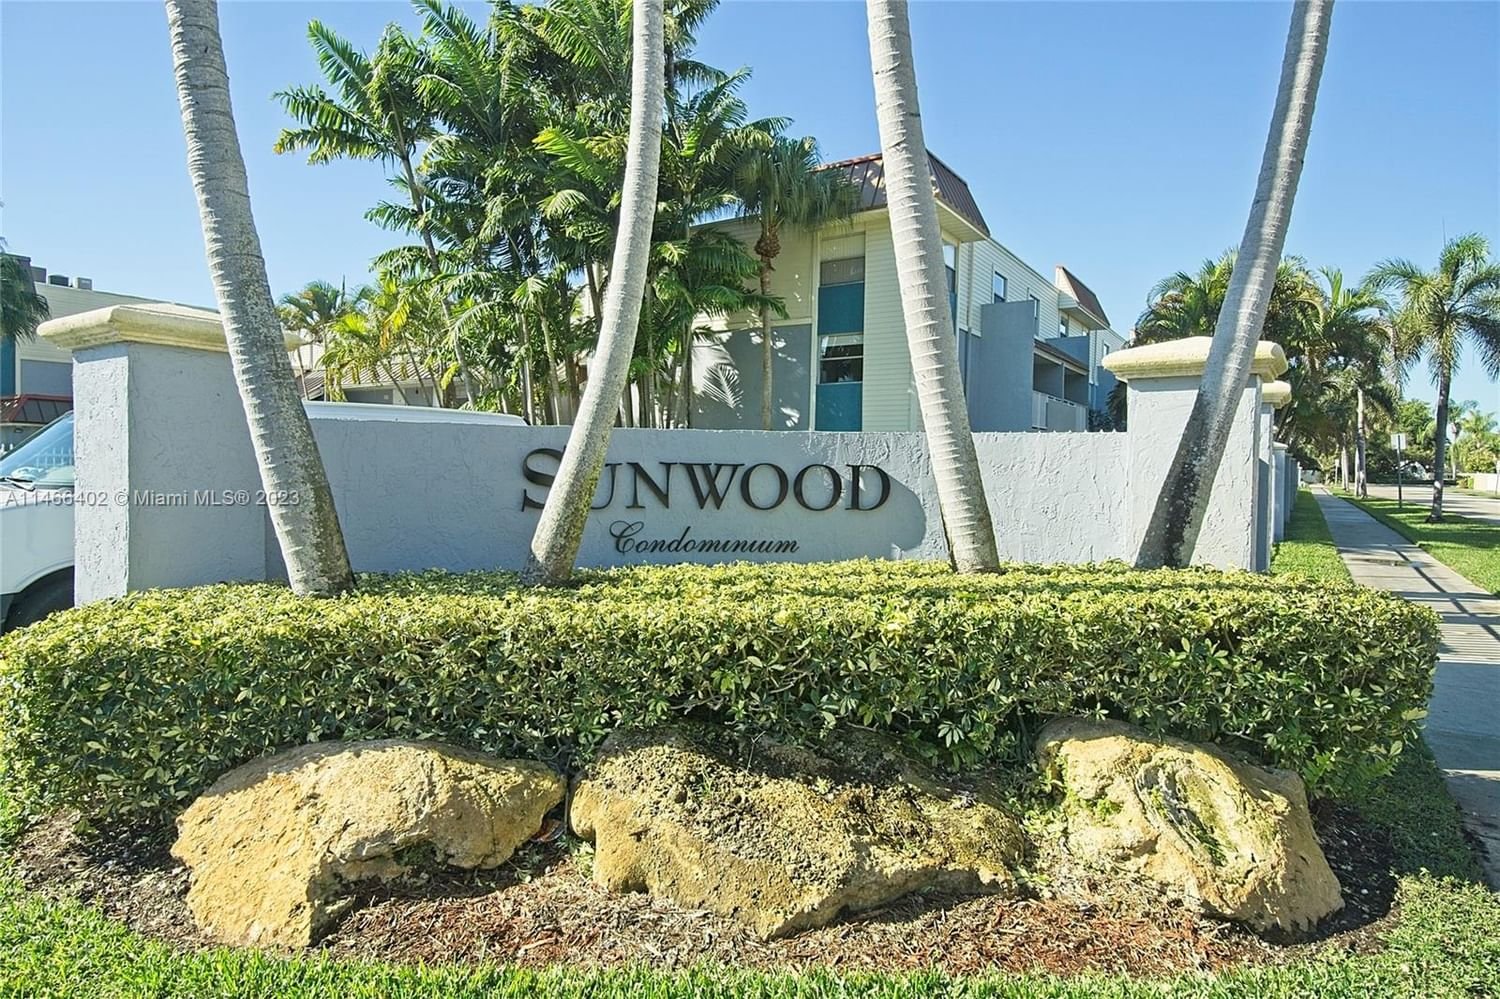 Real estate property located at 4600 67 Ave #231, Miami-Dade County, SUNWOOD CONDO, Miami, FL